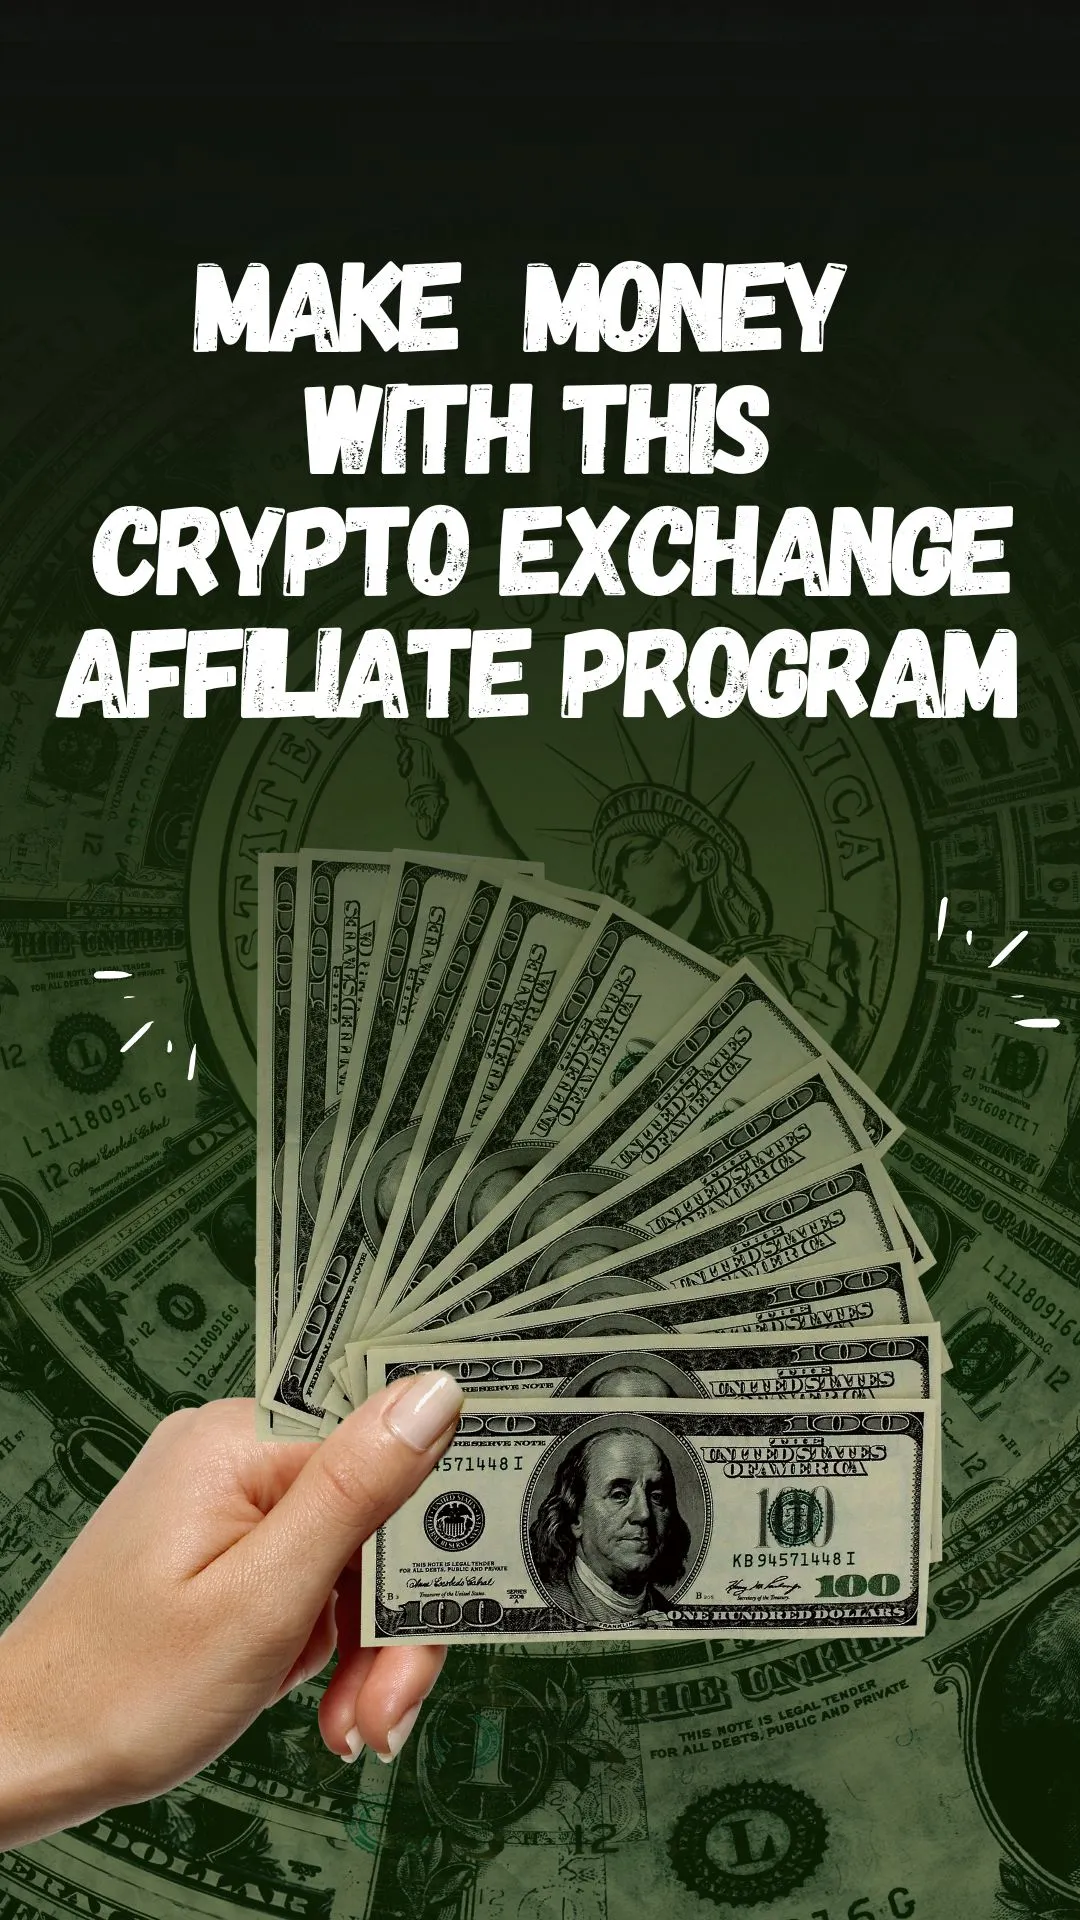 Make money with crypto exchange affiliate program